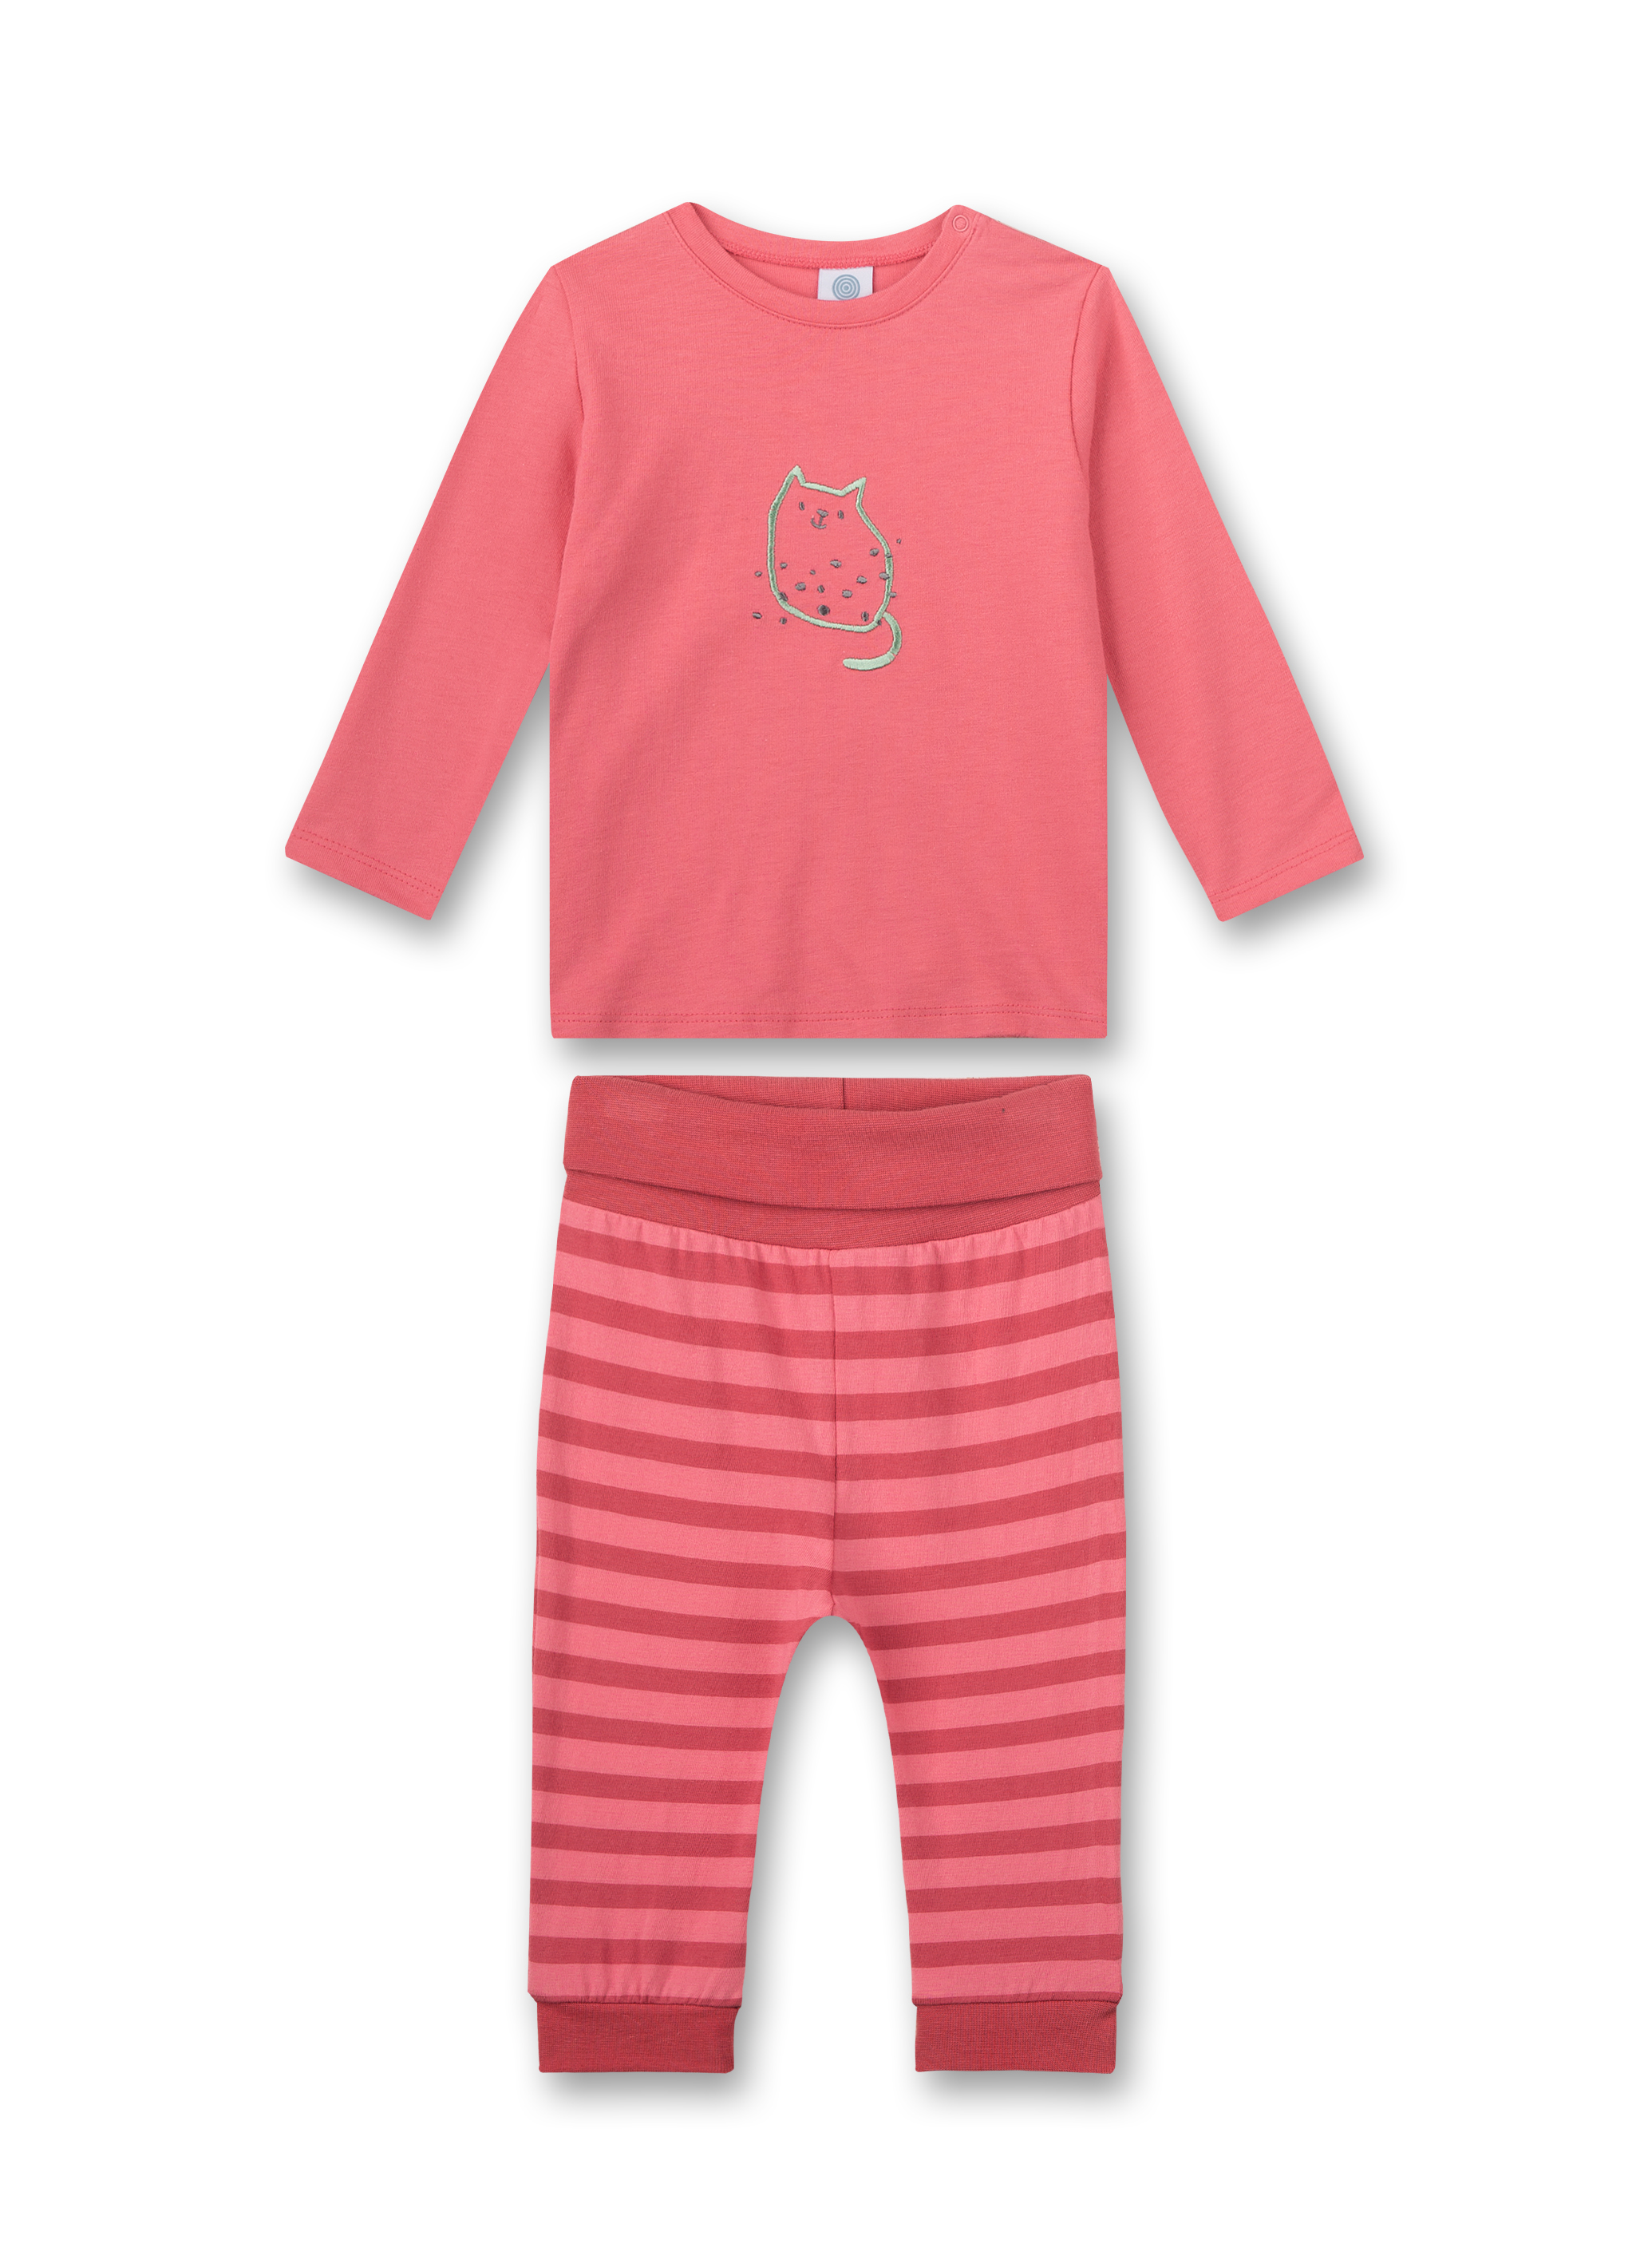 Neu Pyjama Set Schlafanzug Mädchen Hello Kitty grau pink 98 104